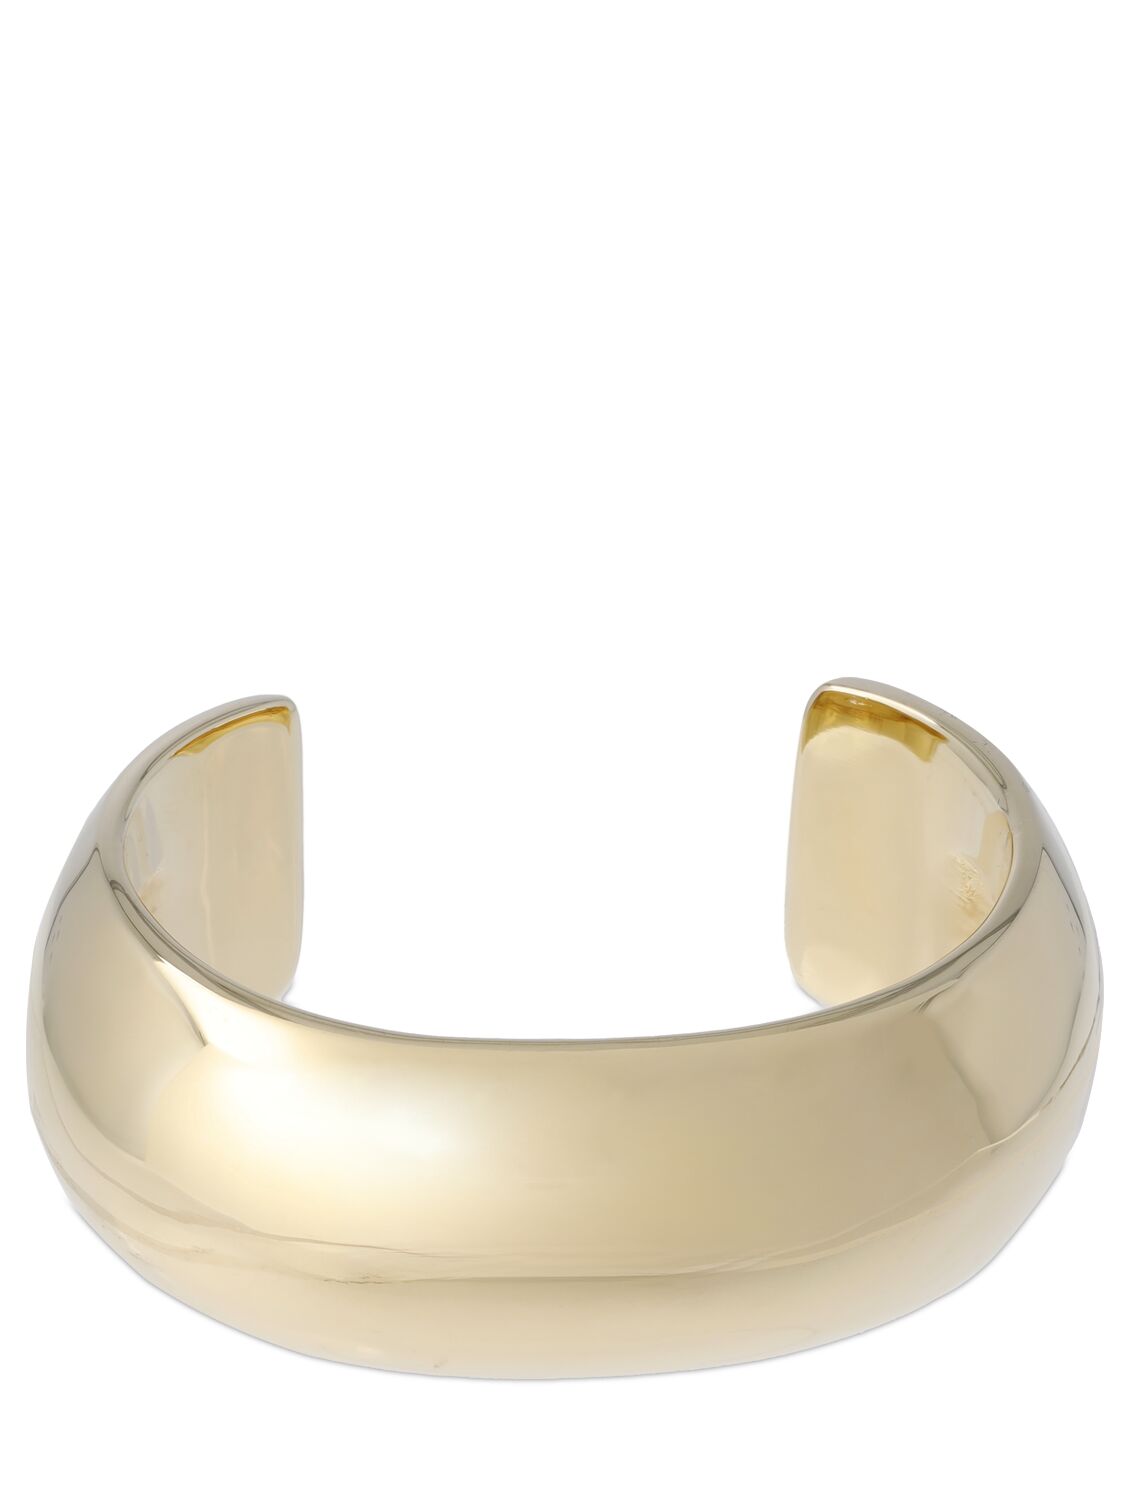 Image of The Small Globe Cuff Bracelet